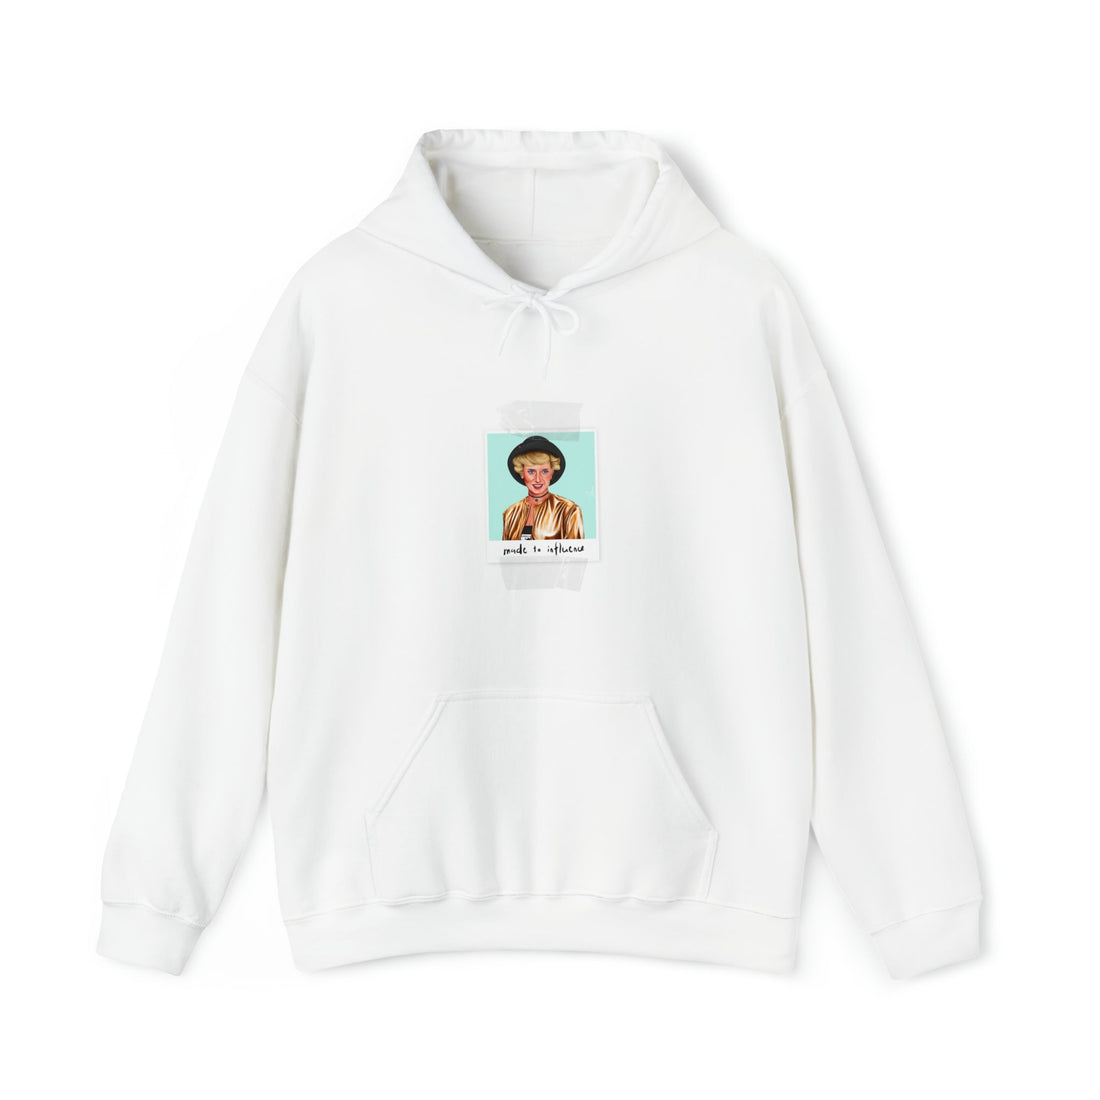 Princess Diana Hipstory Hooded Sweatshirt - Hipstory Shop